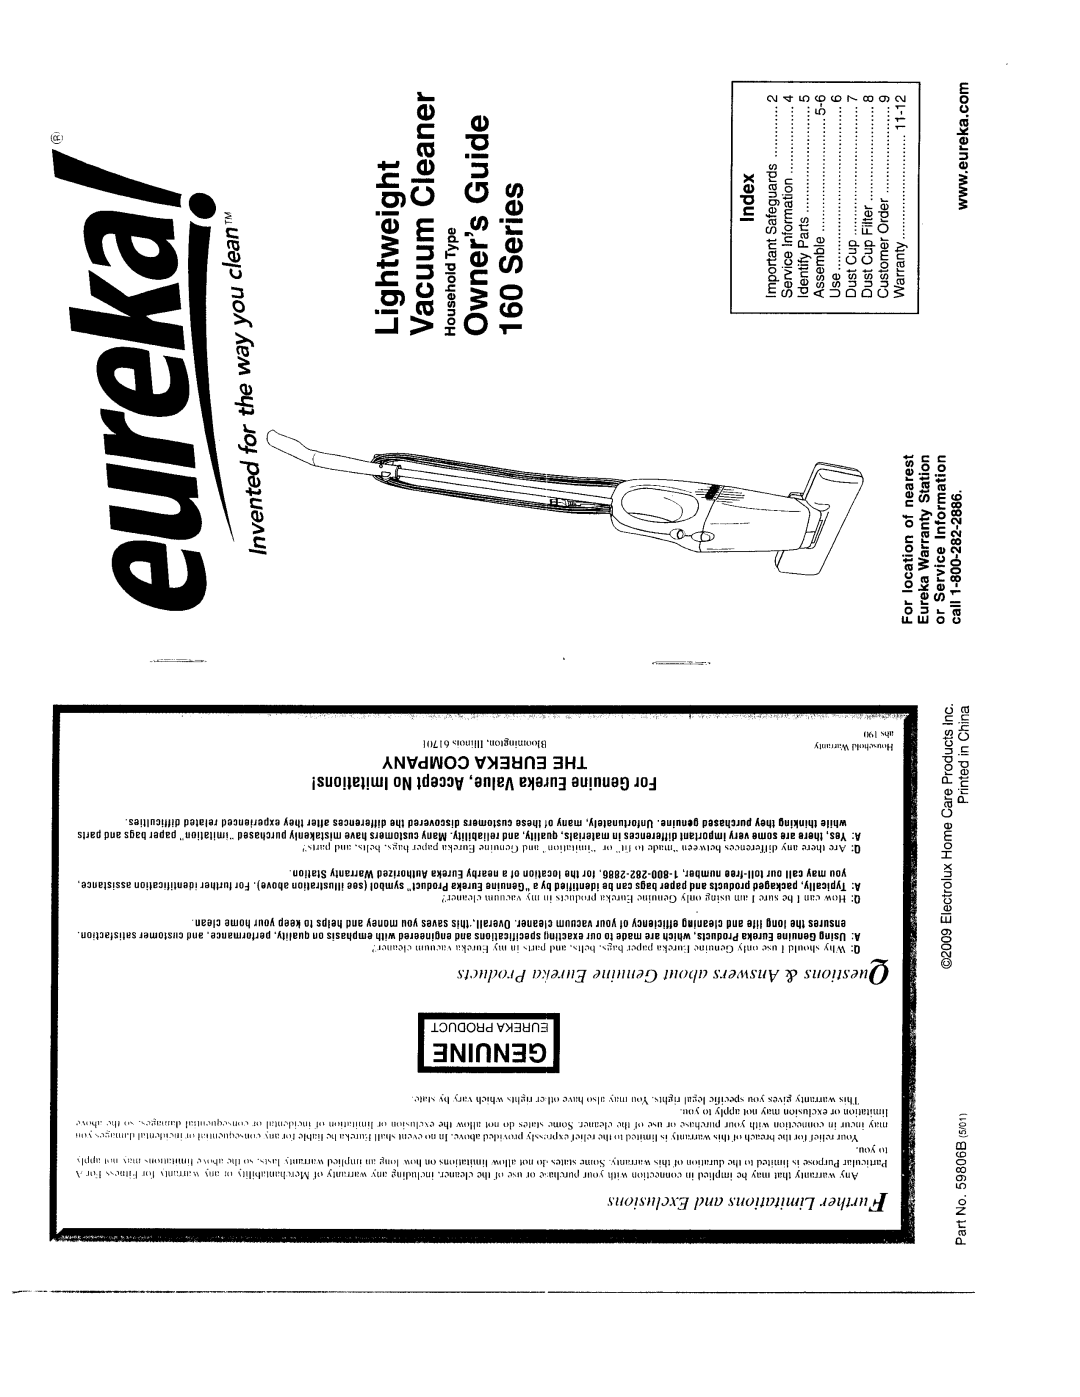 Eureka 169B manual 